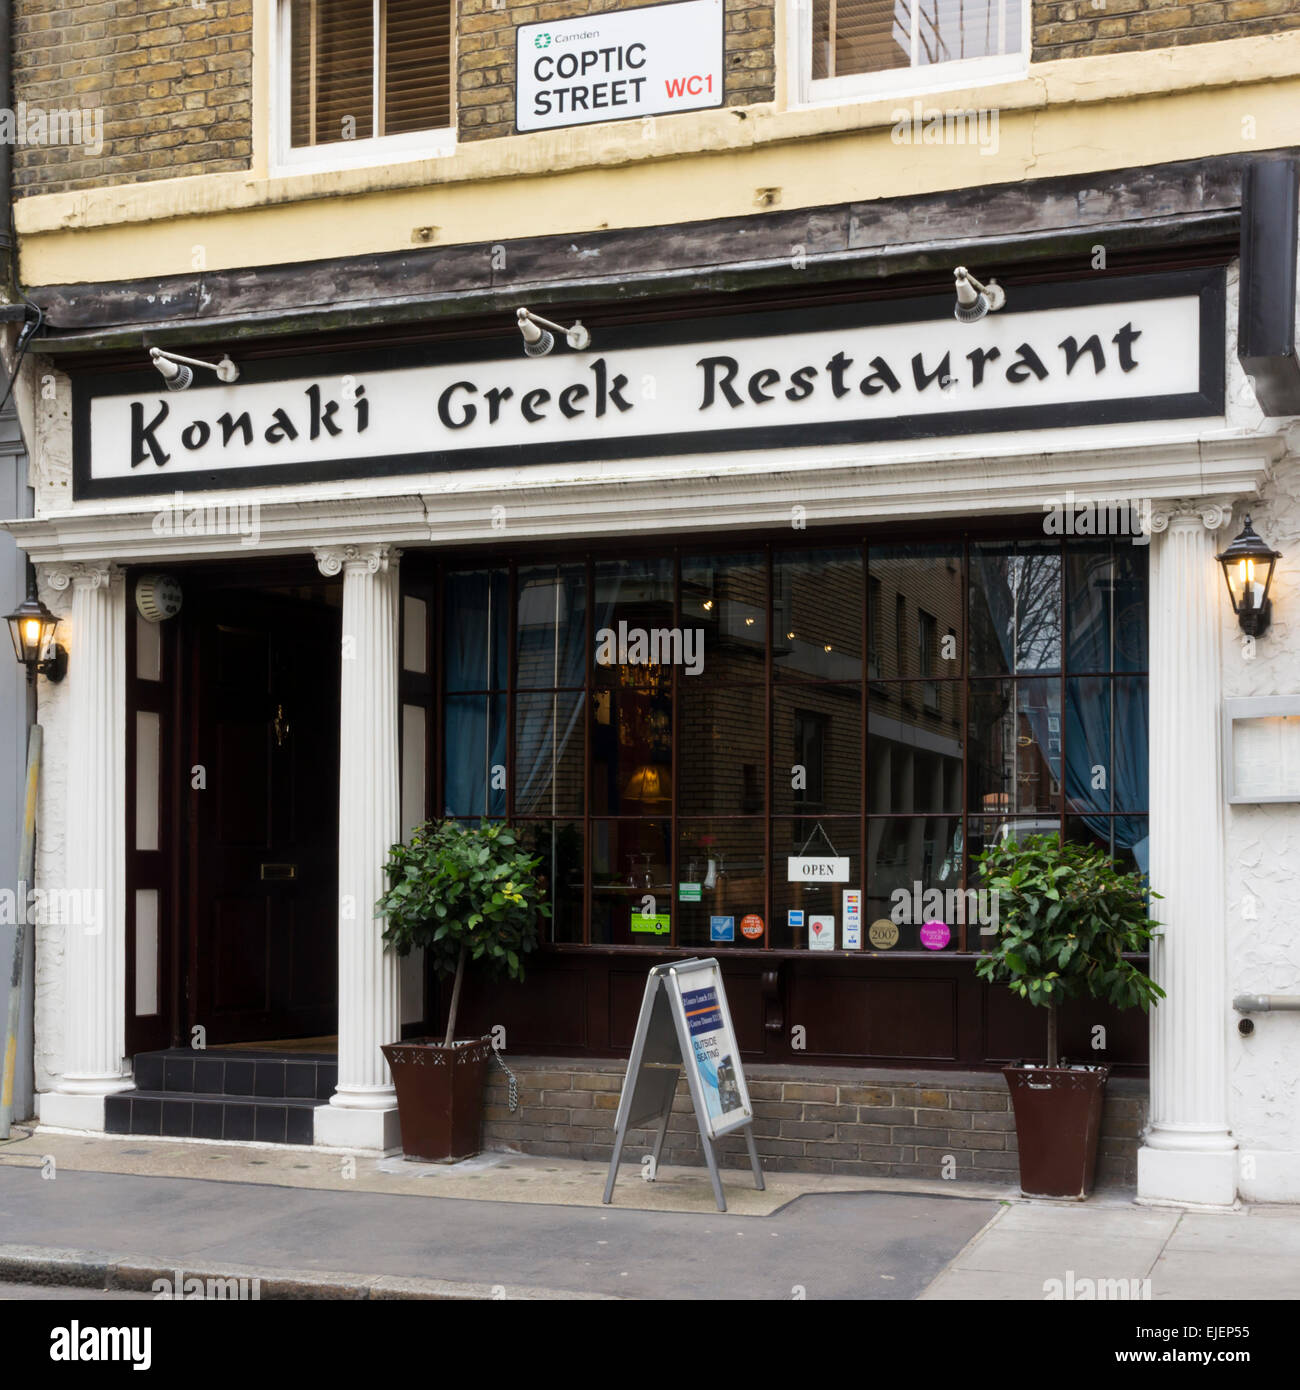 Konaki Greek Restaurant in Coptic Street, London. Stock Photo